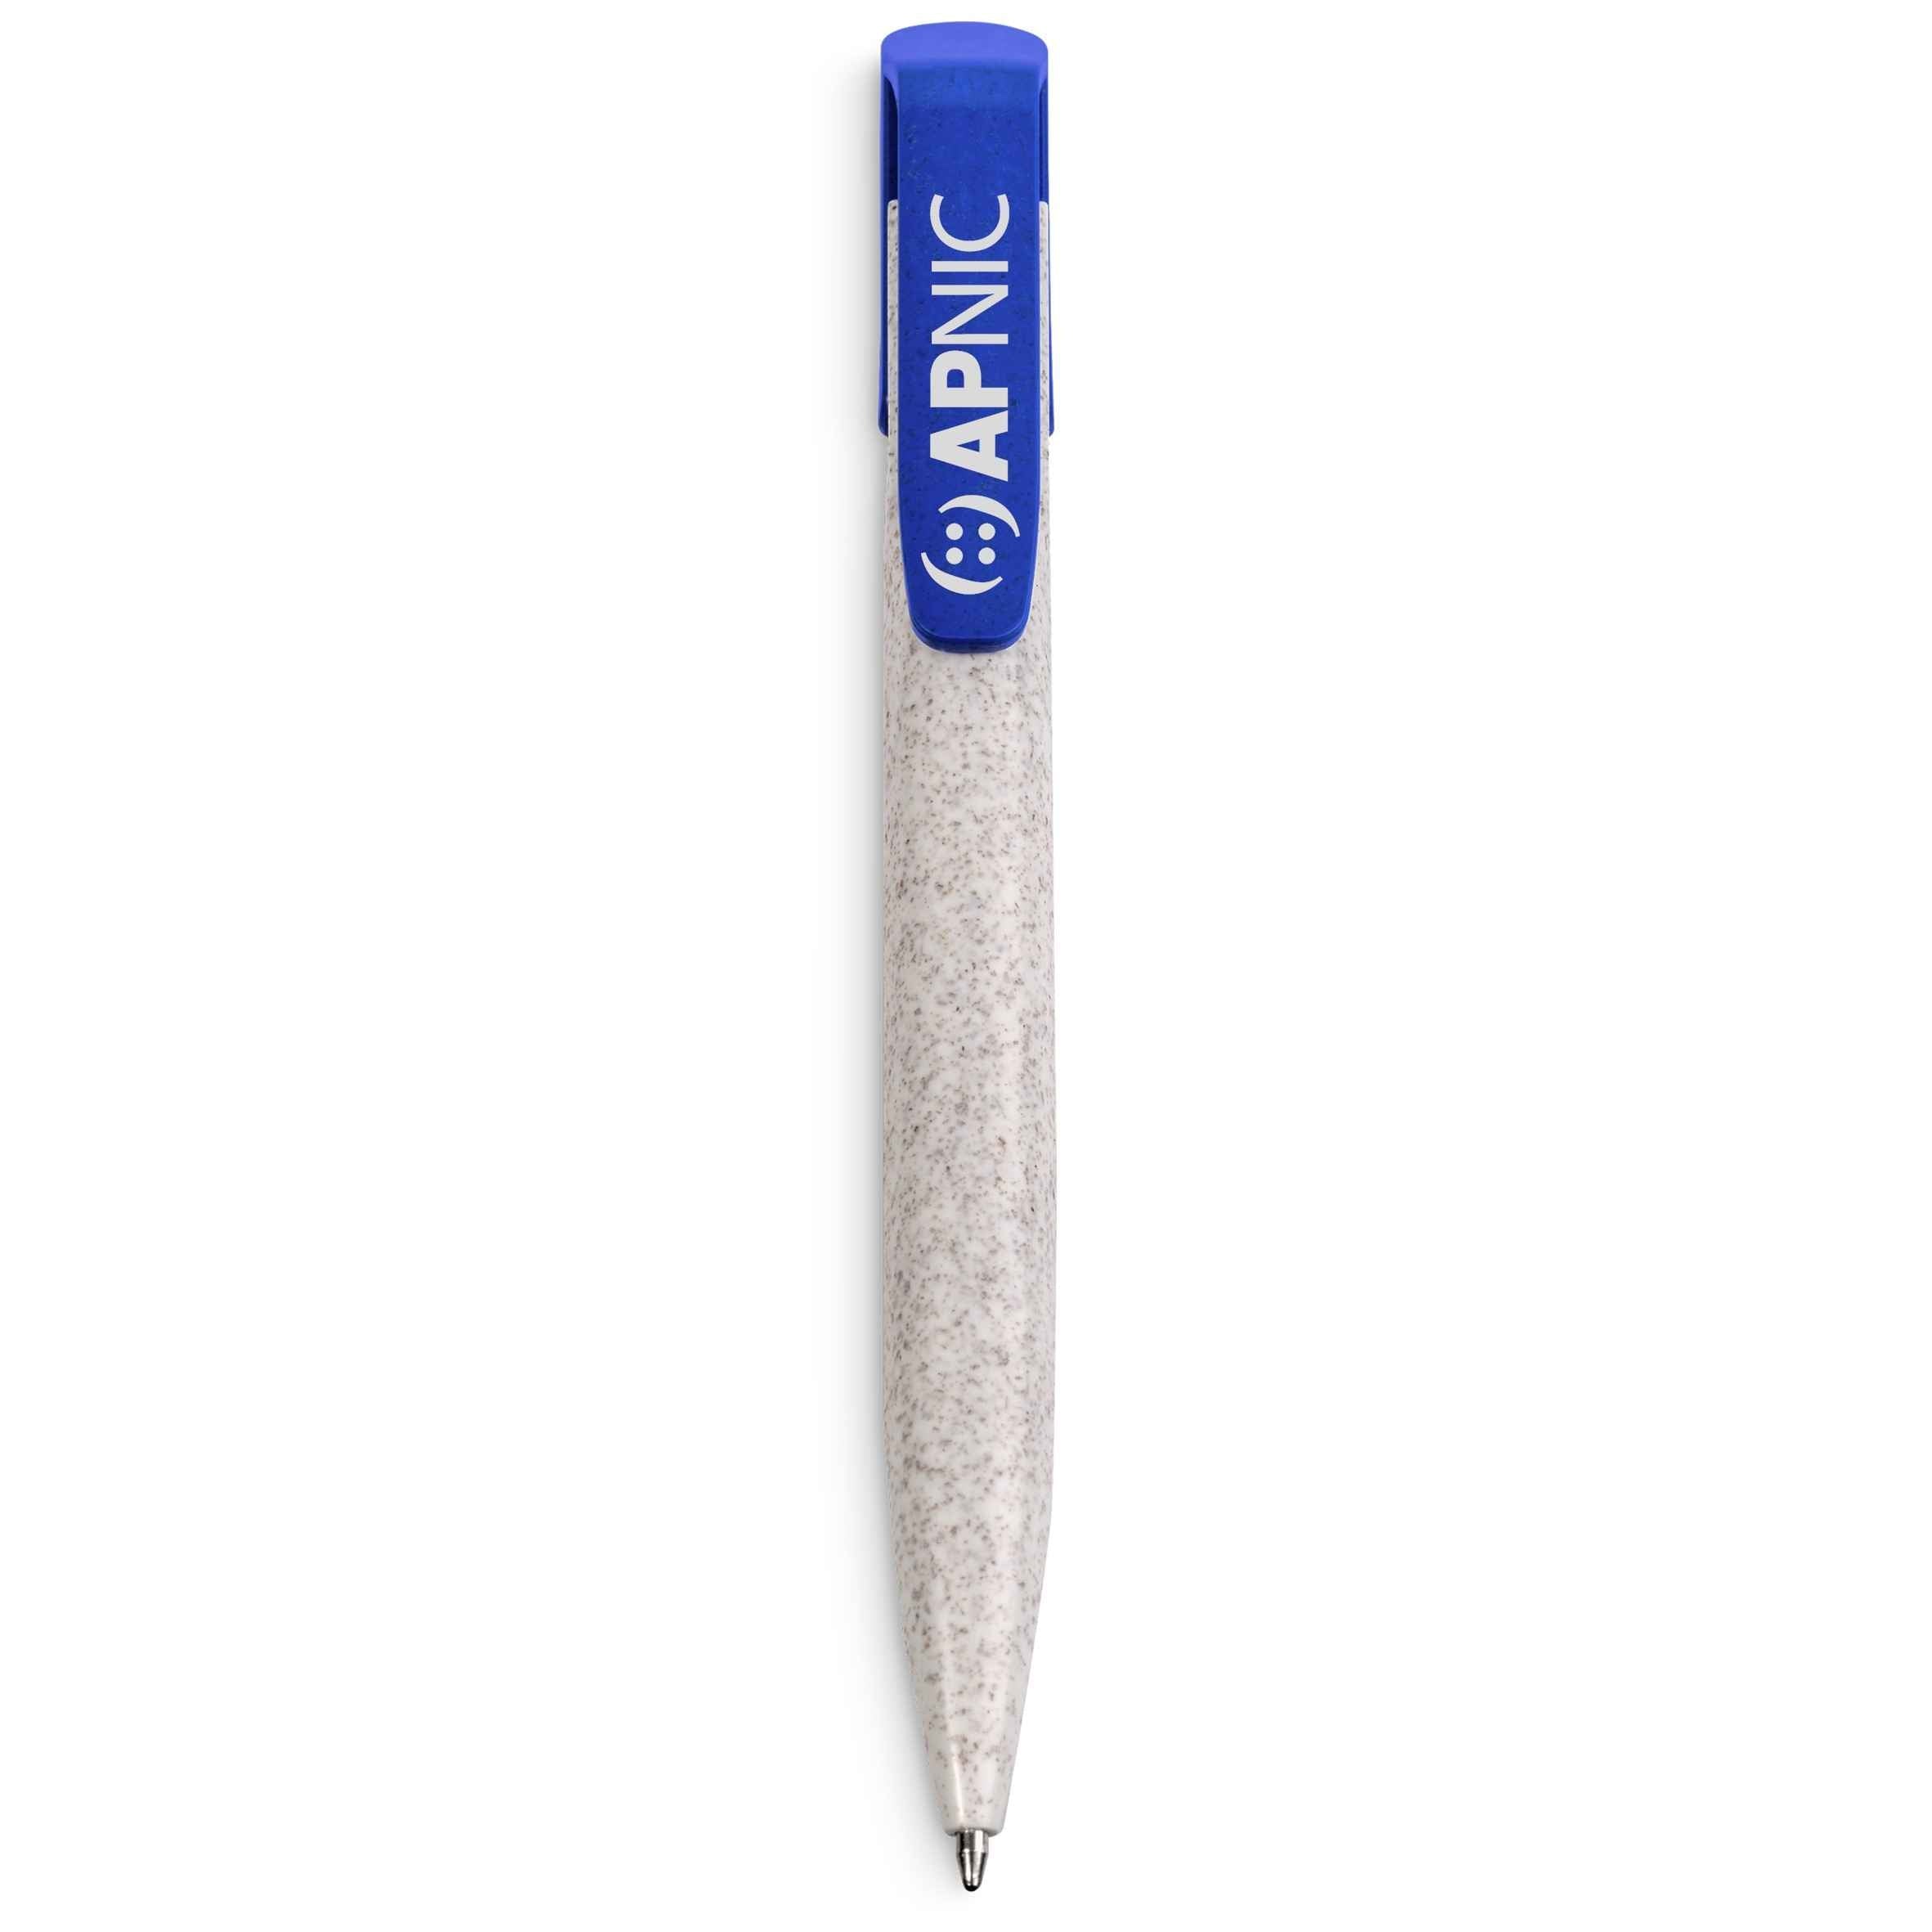 A wheat straw environmentally friendly pen shown in blue.